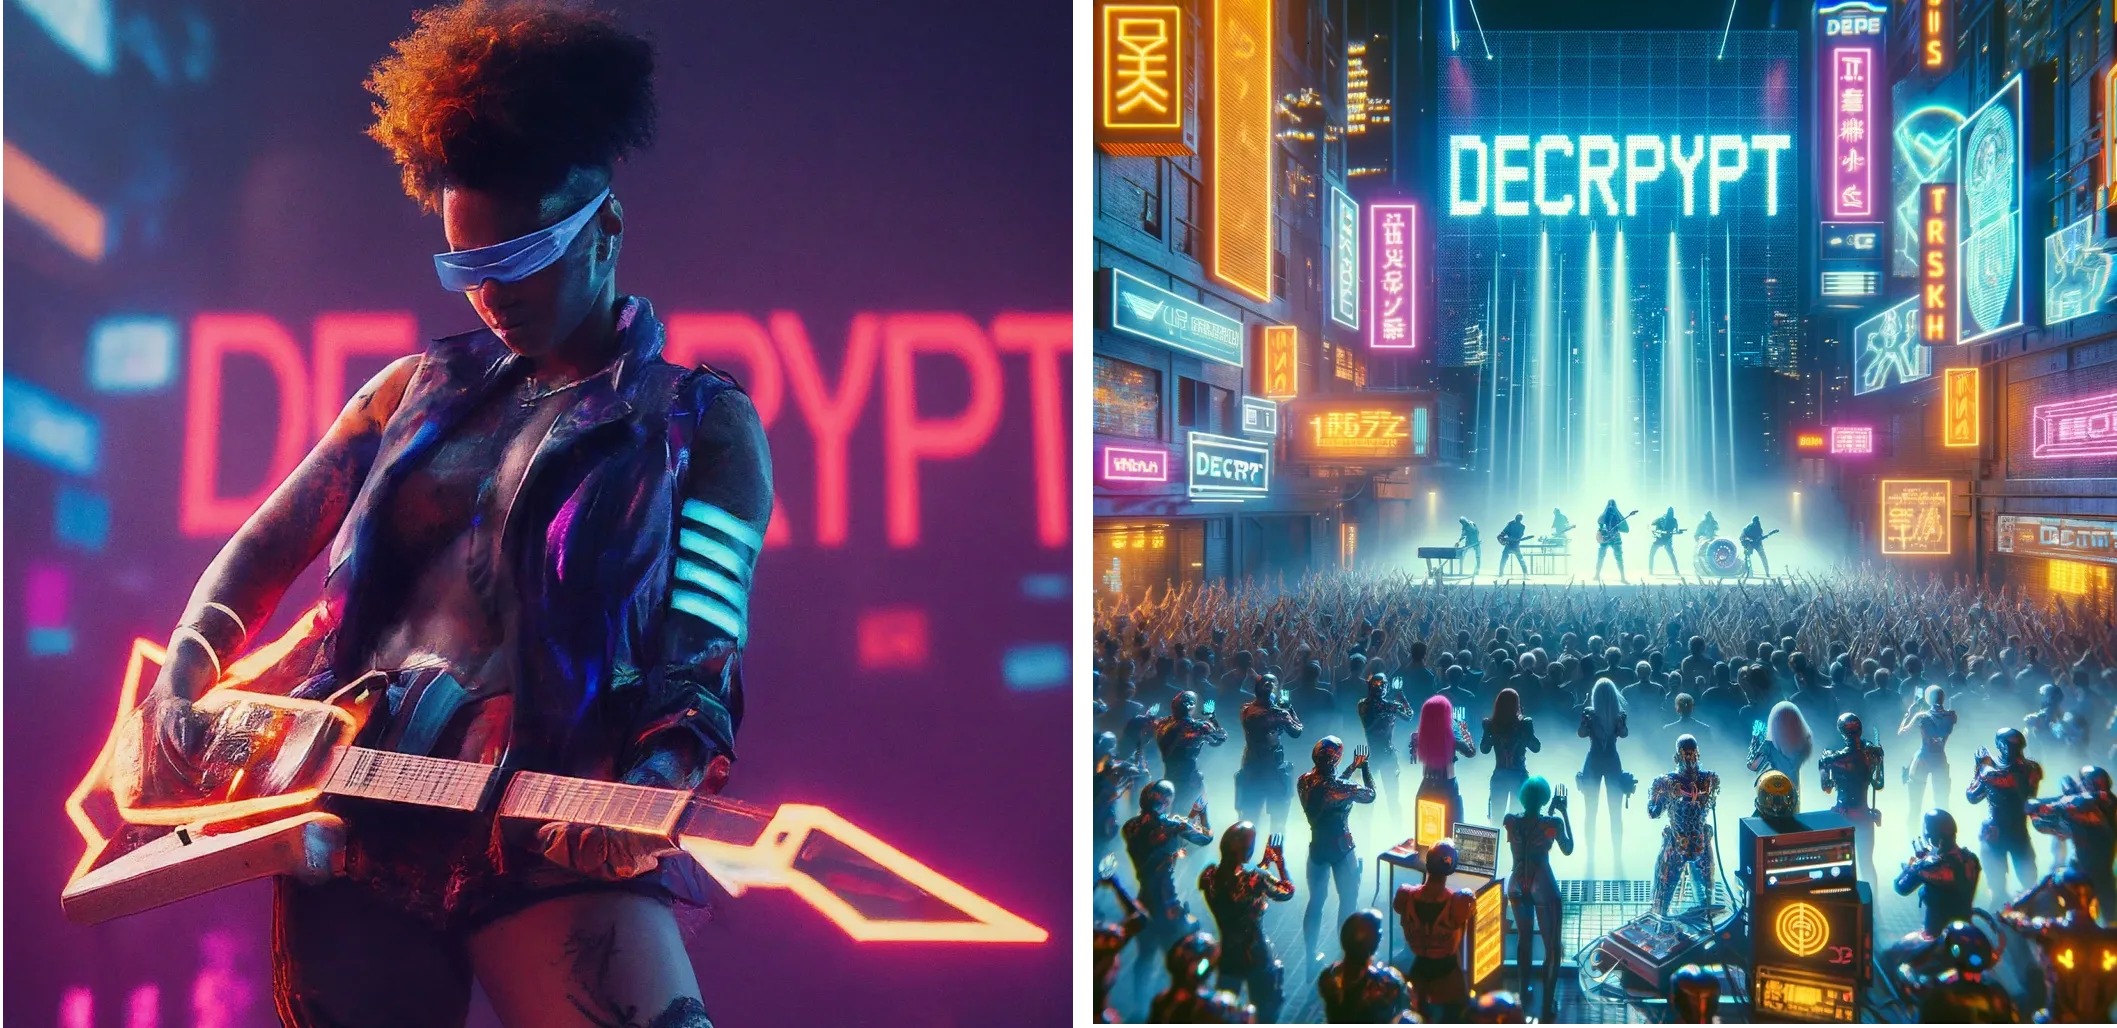 Cyberpunk futuristisk kunstner optræder på scenen med ordet "DECRYPT" i neonlys i baggrunden. Gemini (venstre) vs ChatGPT Plus (højre)